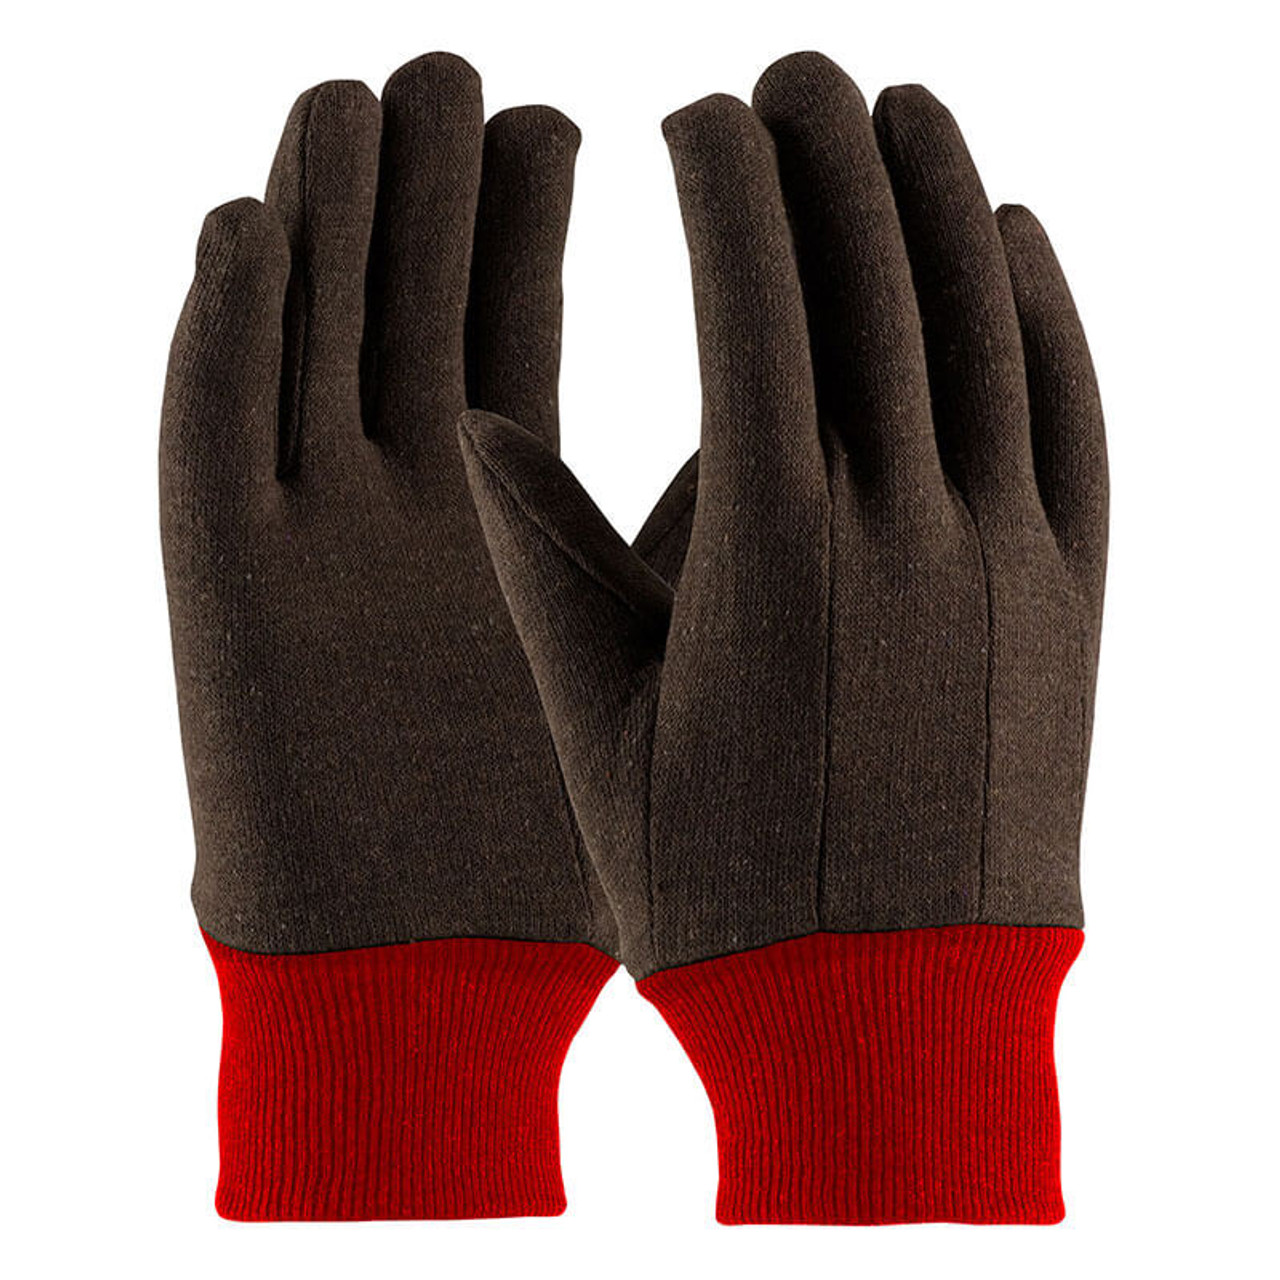 PIP Reg. Weight Poly/Cotton Jersey Glove w/Fleece Lining 750RKW 12